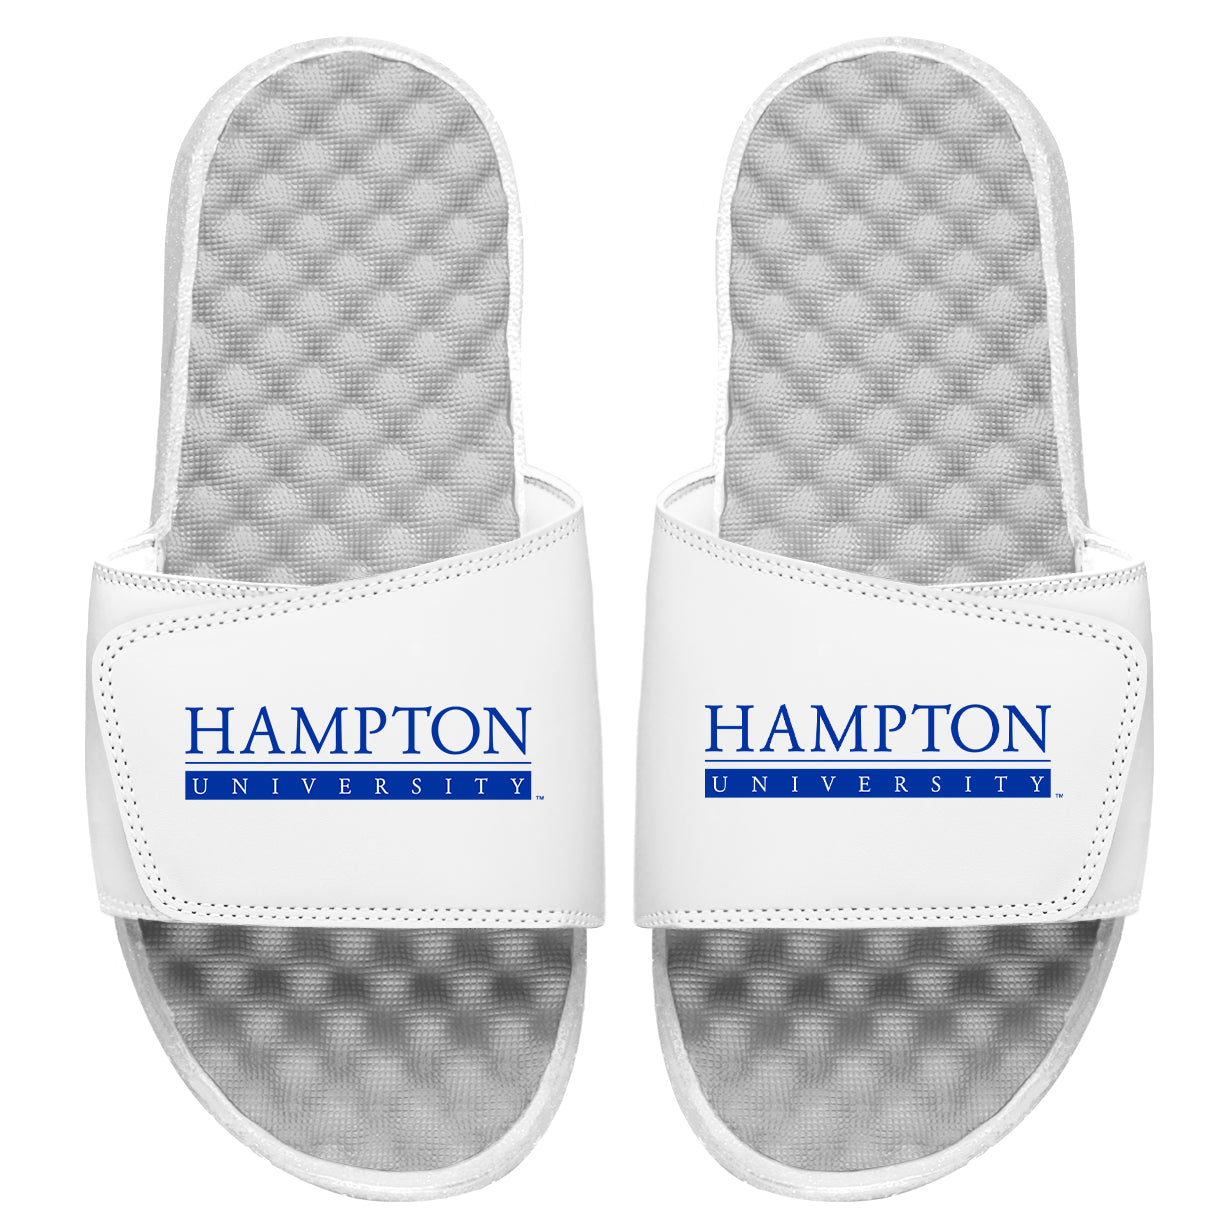 Hampton University Slides